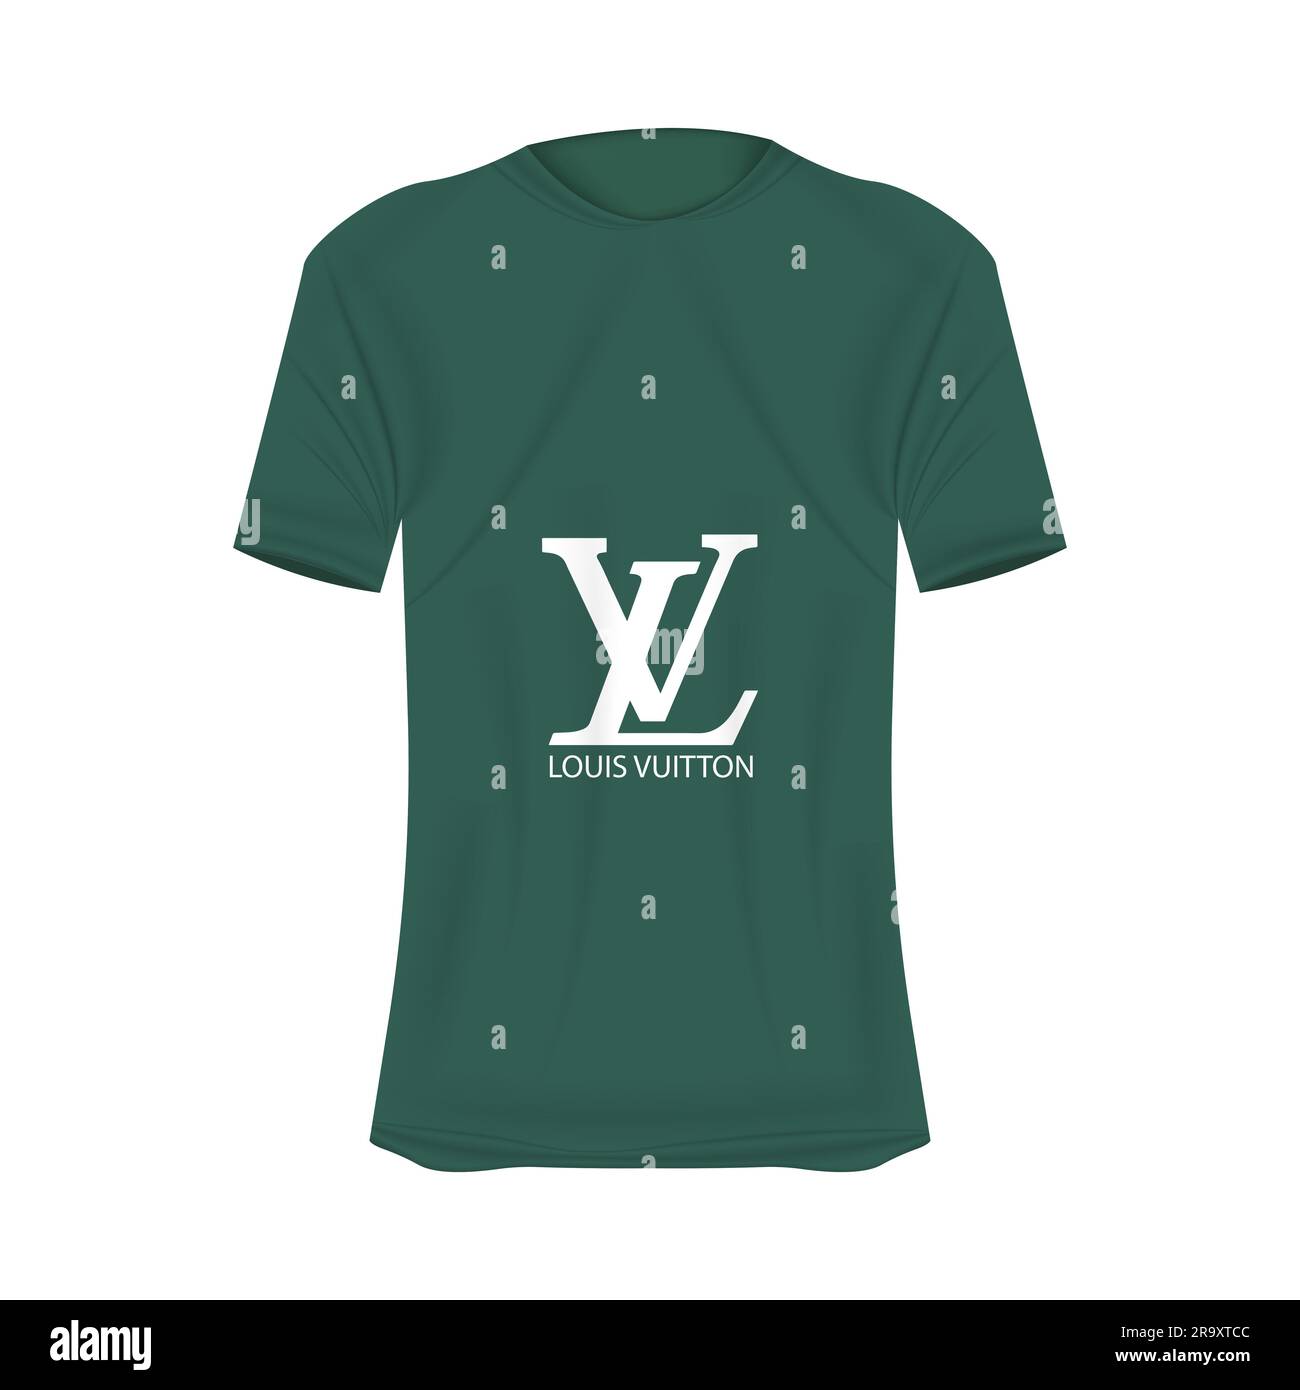 Cheap Colorful Louis Vuitton Logo T Shirt, Louis Vuitton T Shirt